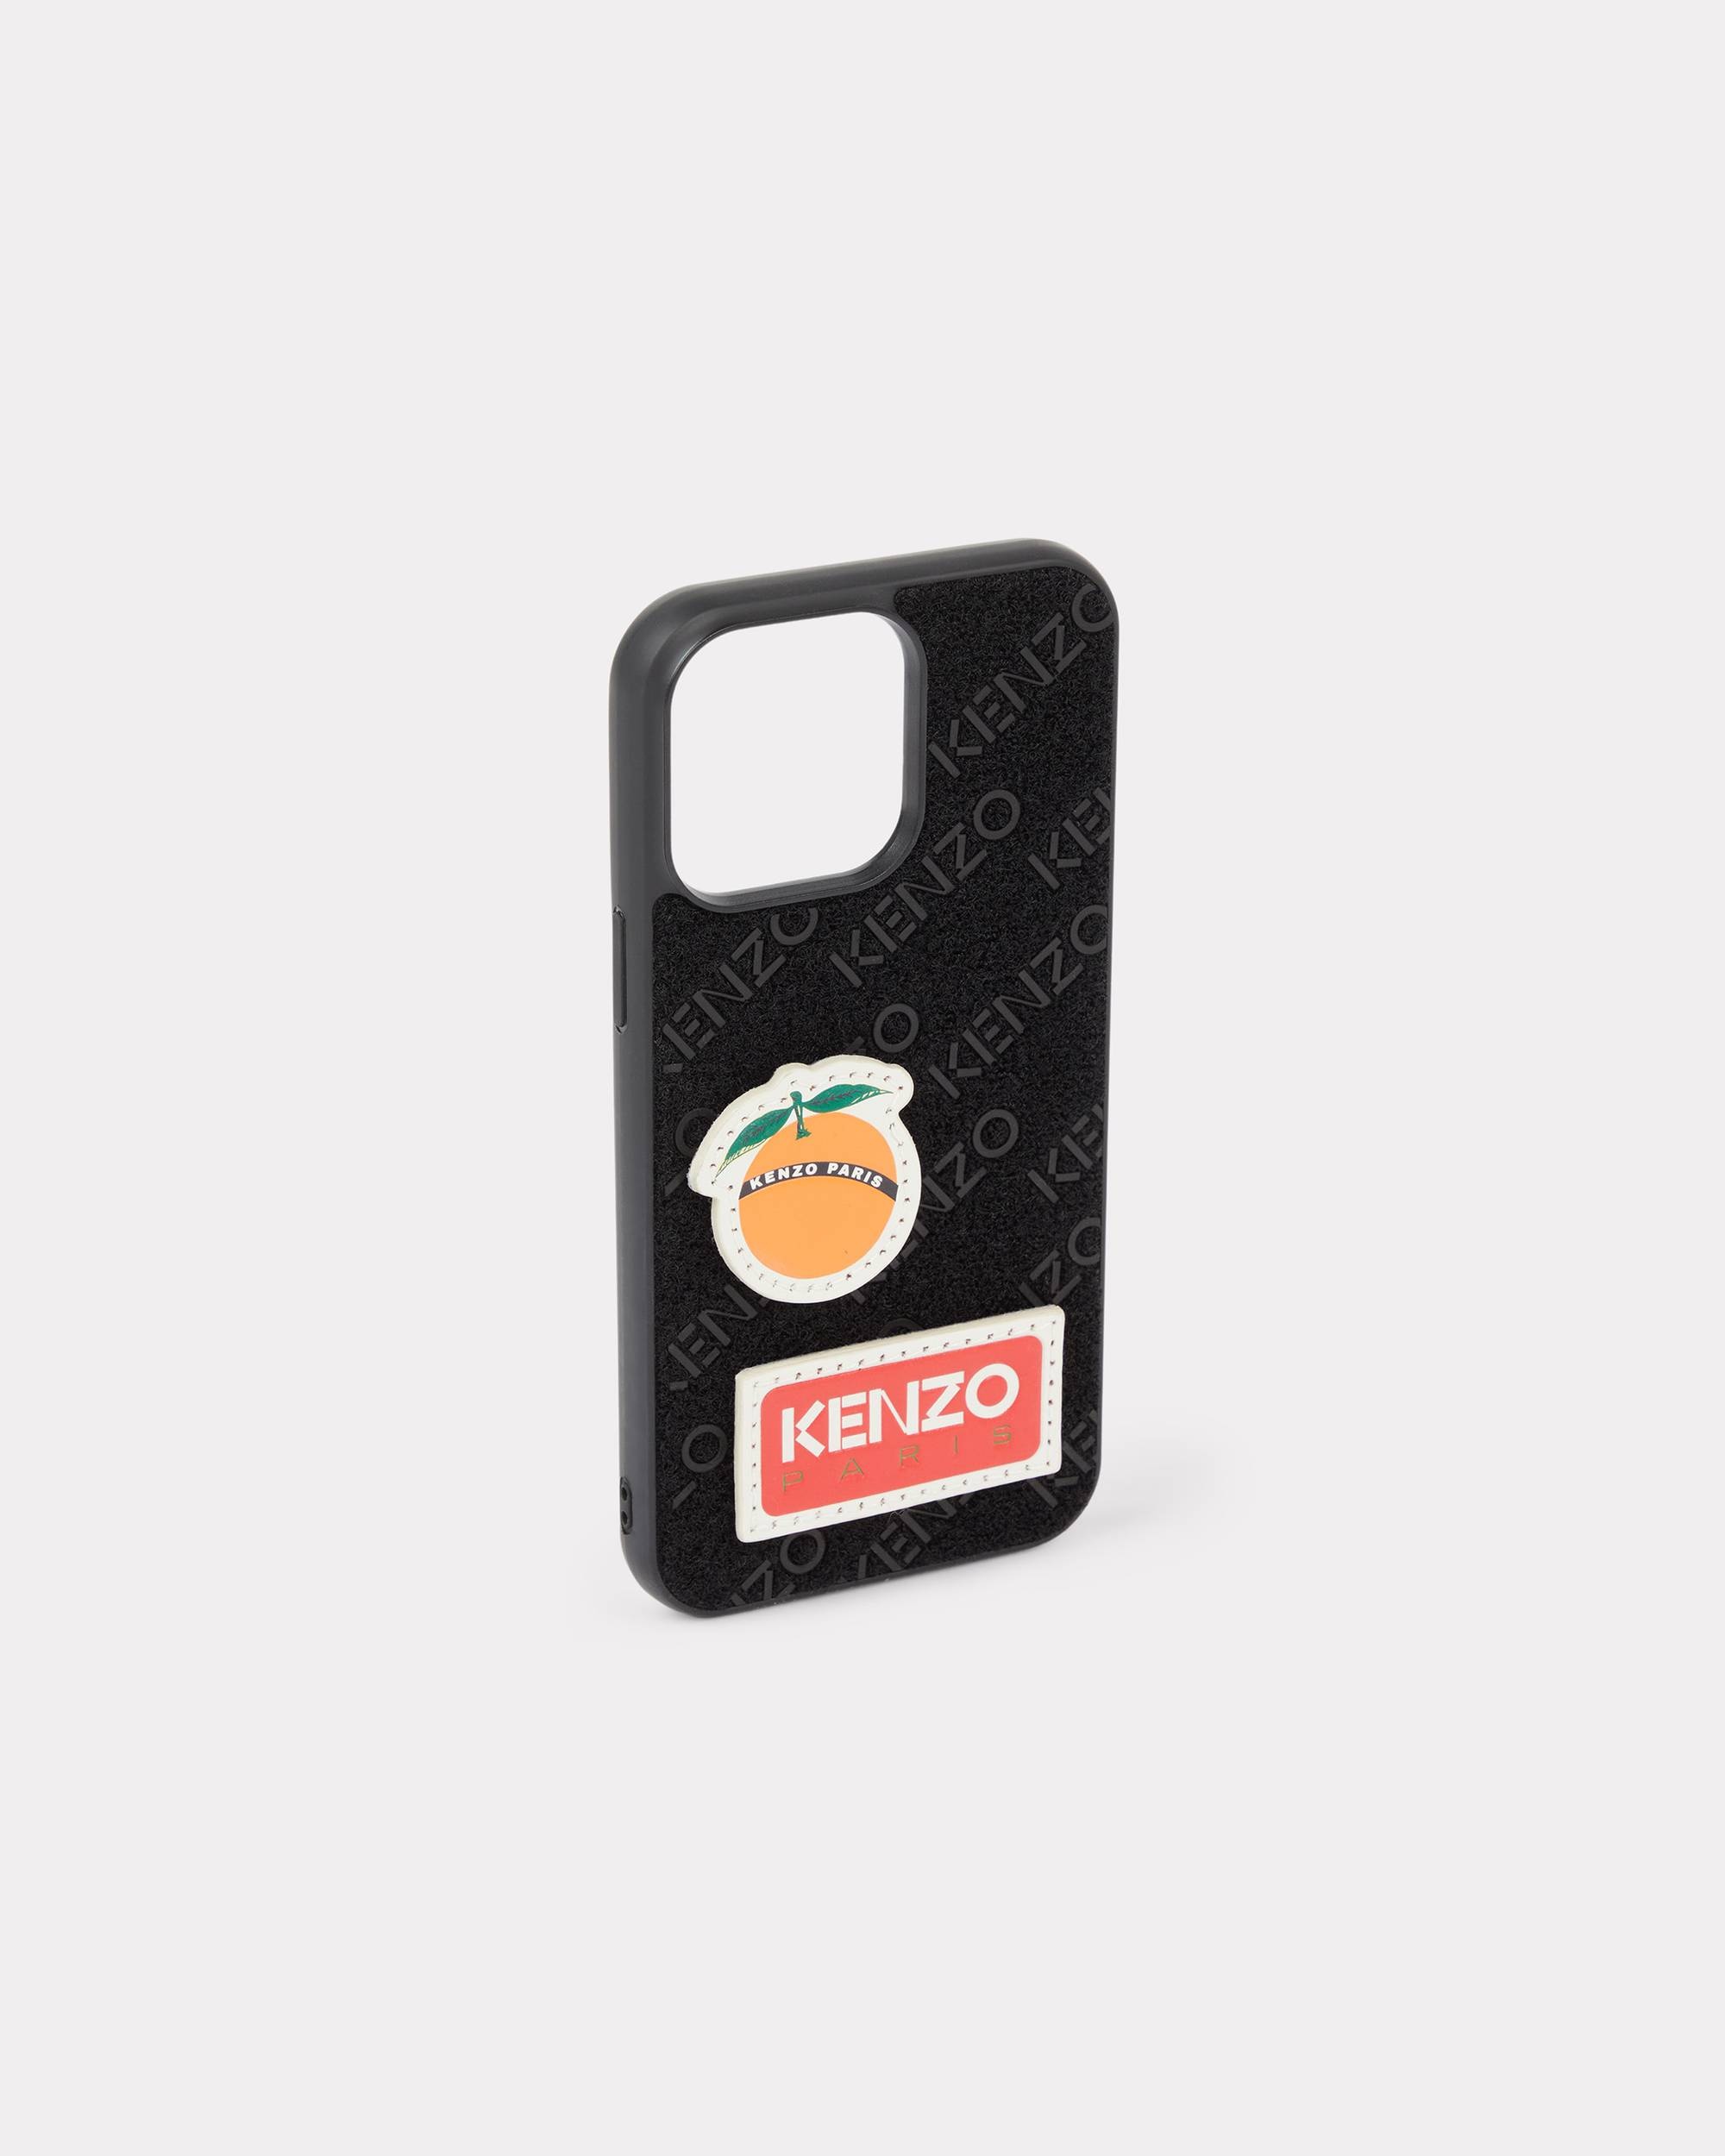 'KENZO Jungle' iPhone case - 1